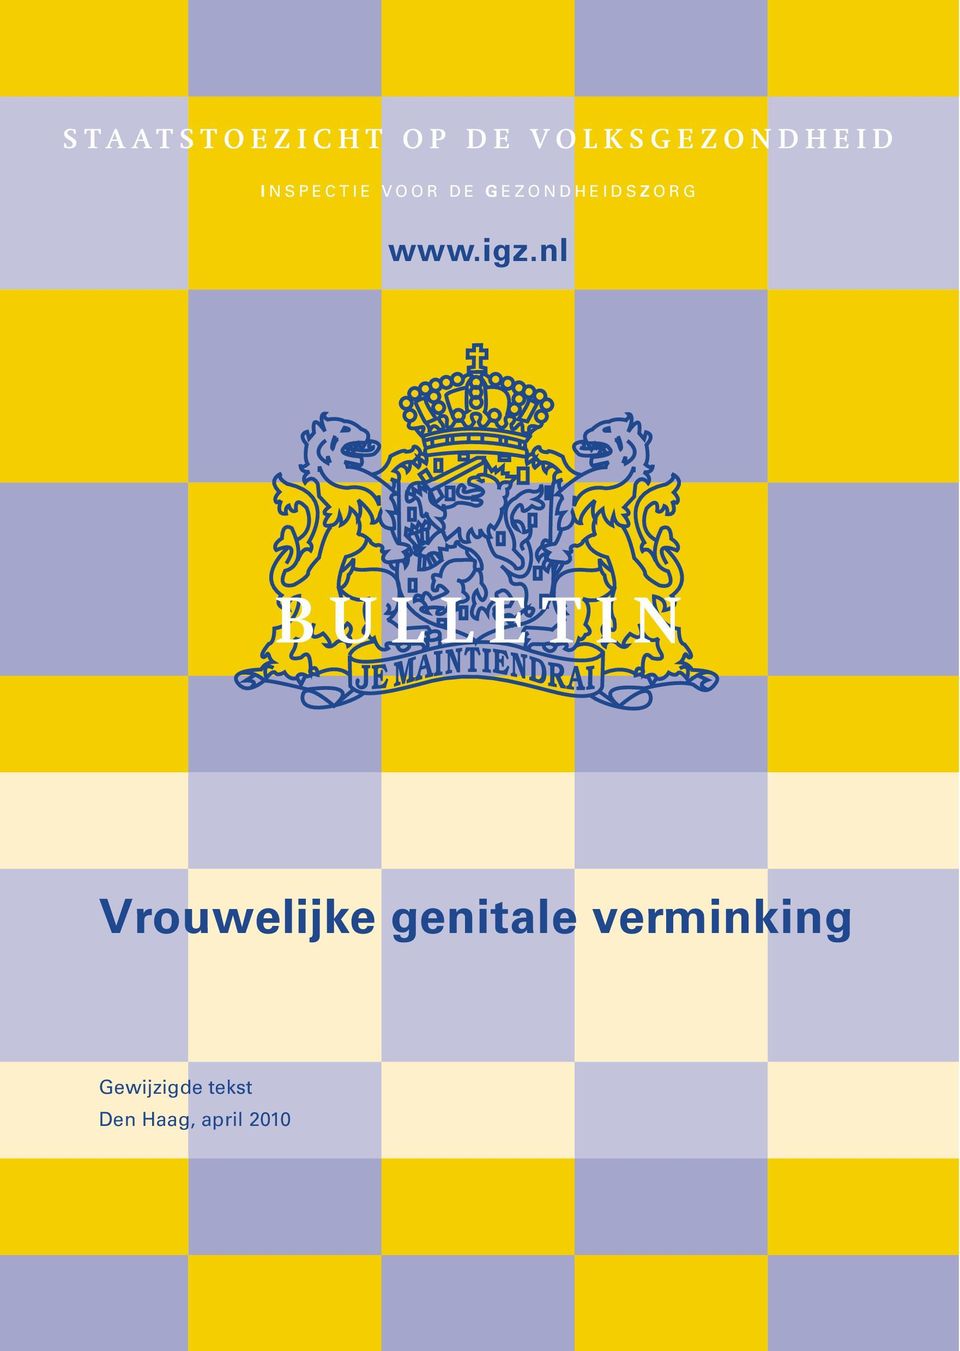 igz.nl BULLETIN Vrouwelijke genitale